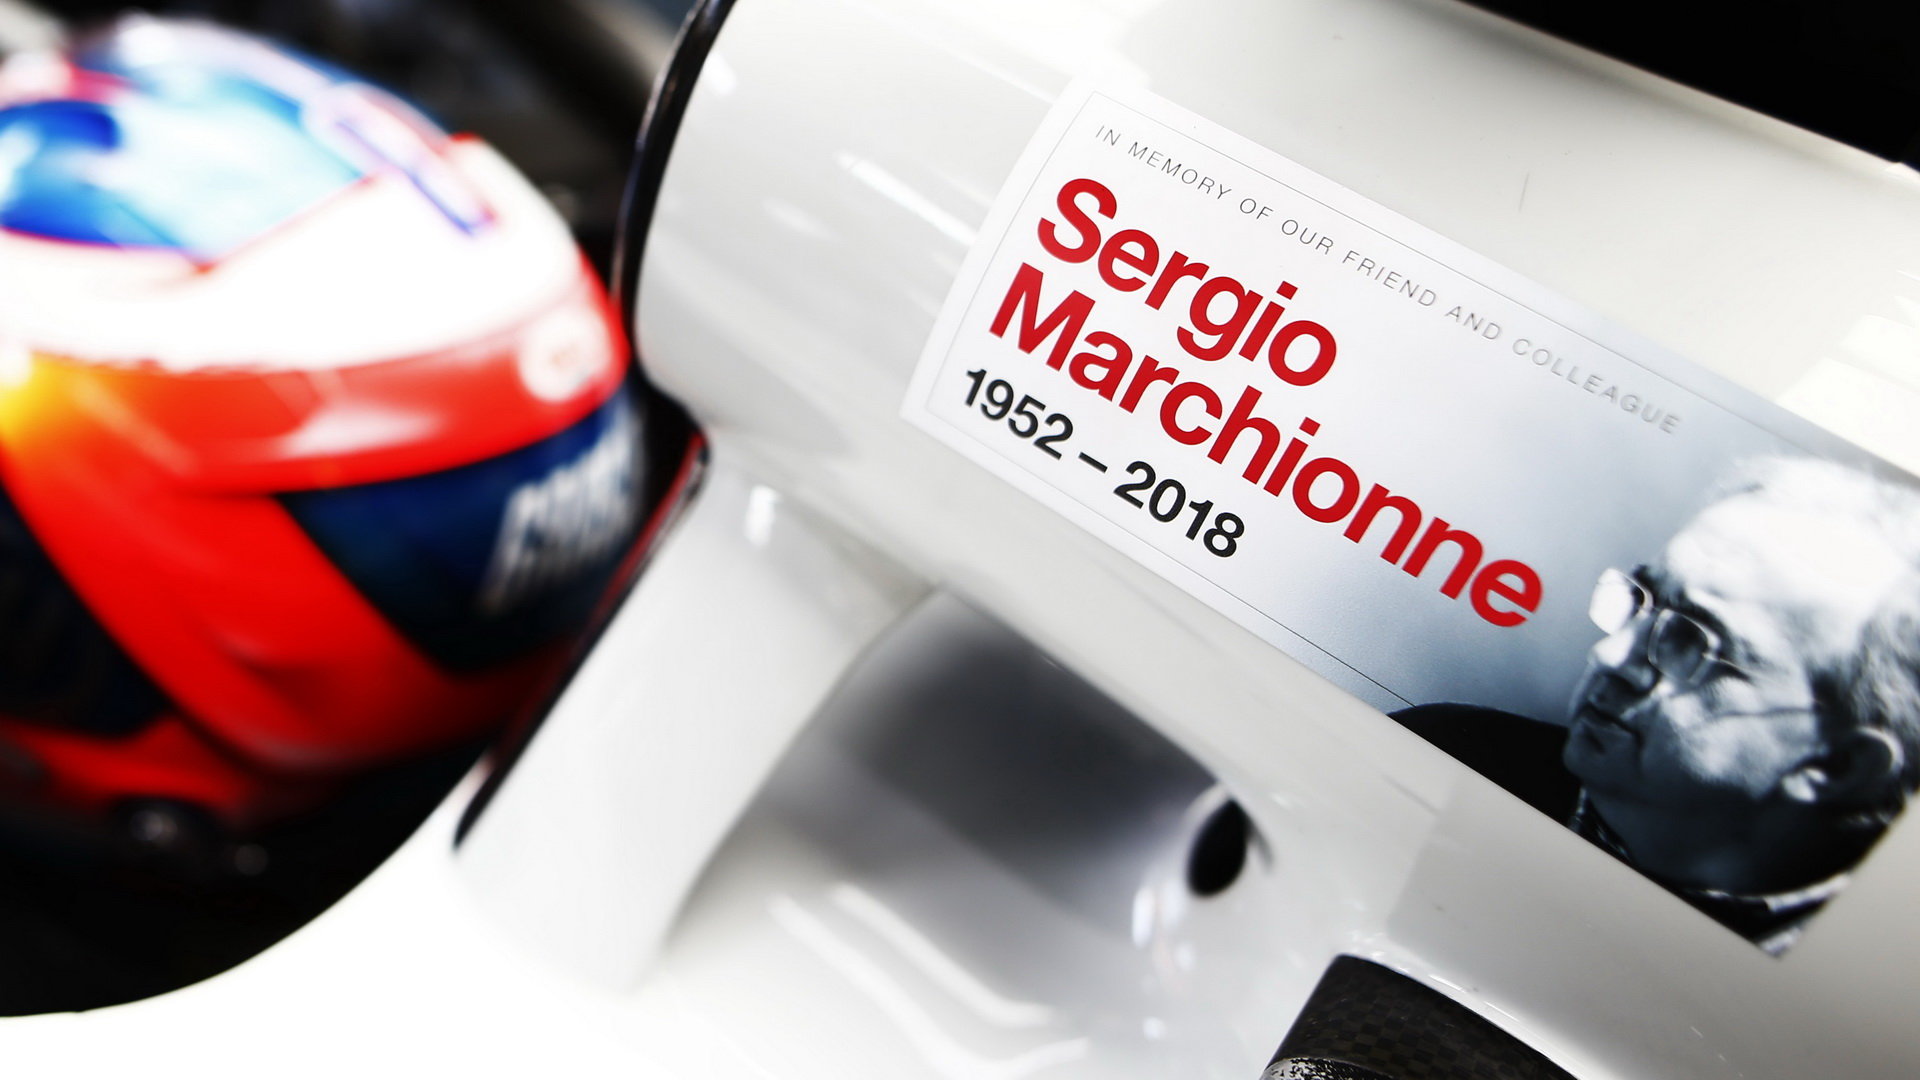 Romain Grosjean a vzpomínka na Sergio Marchionneho na jeho voze v tréninku v Maďarsku